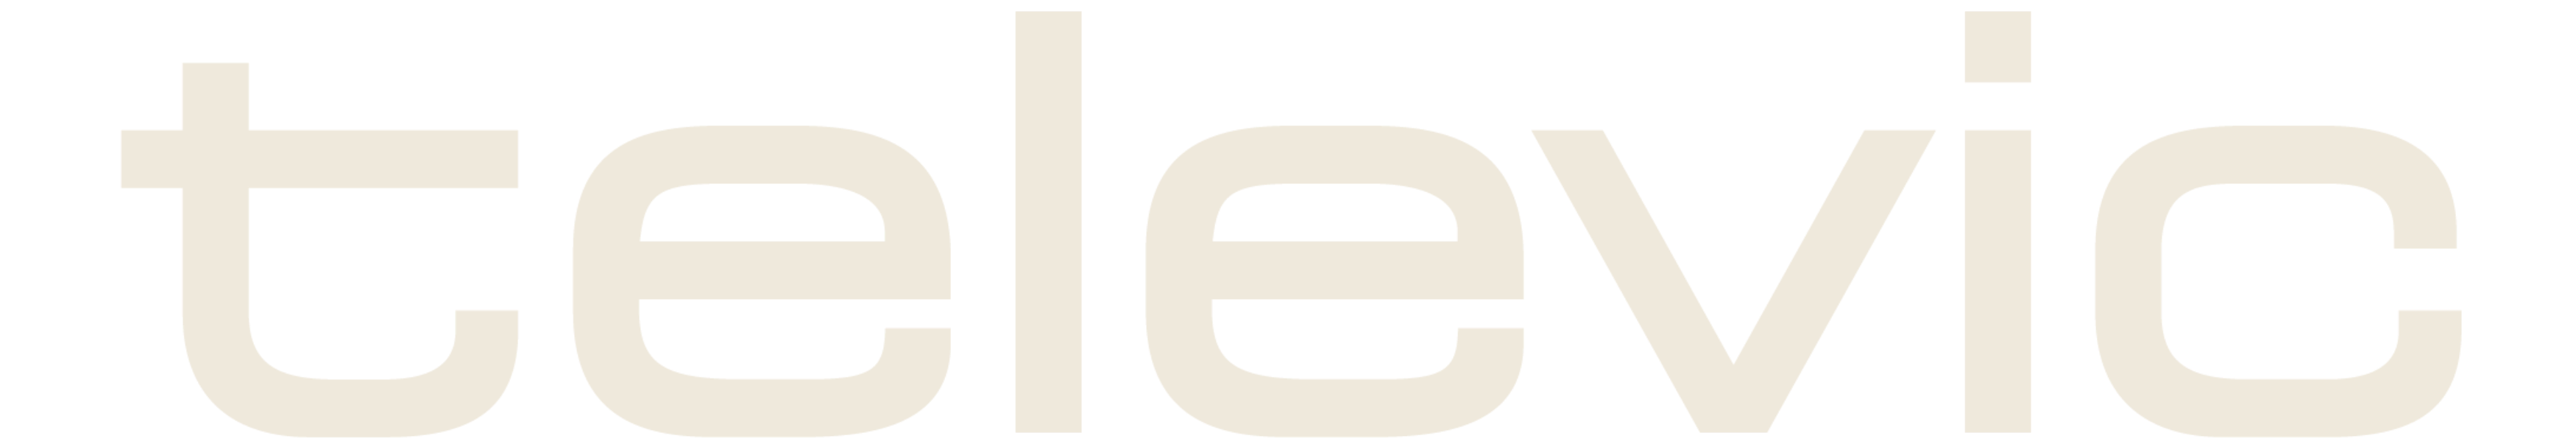 Steering_Logo_V03